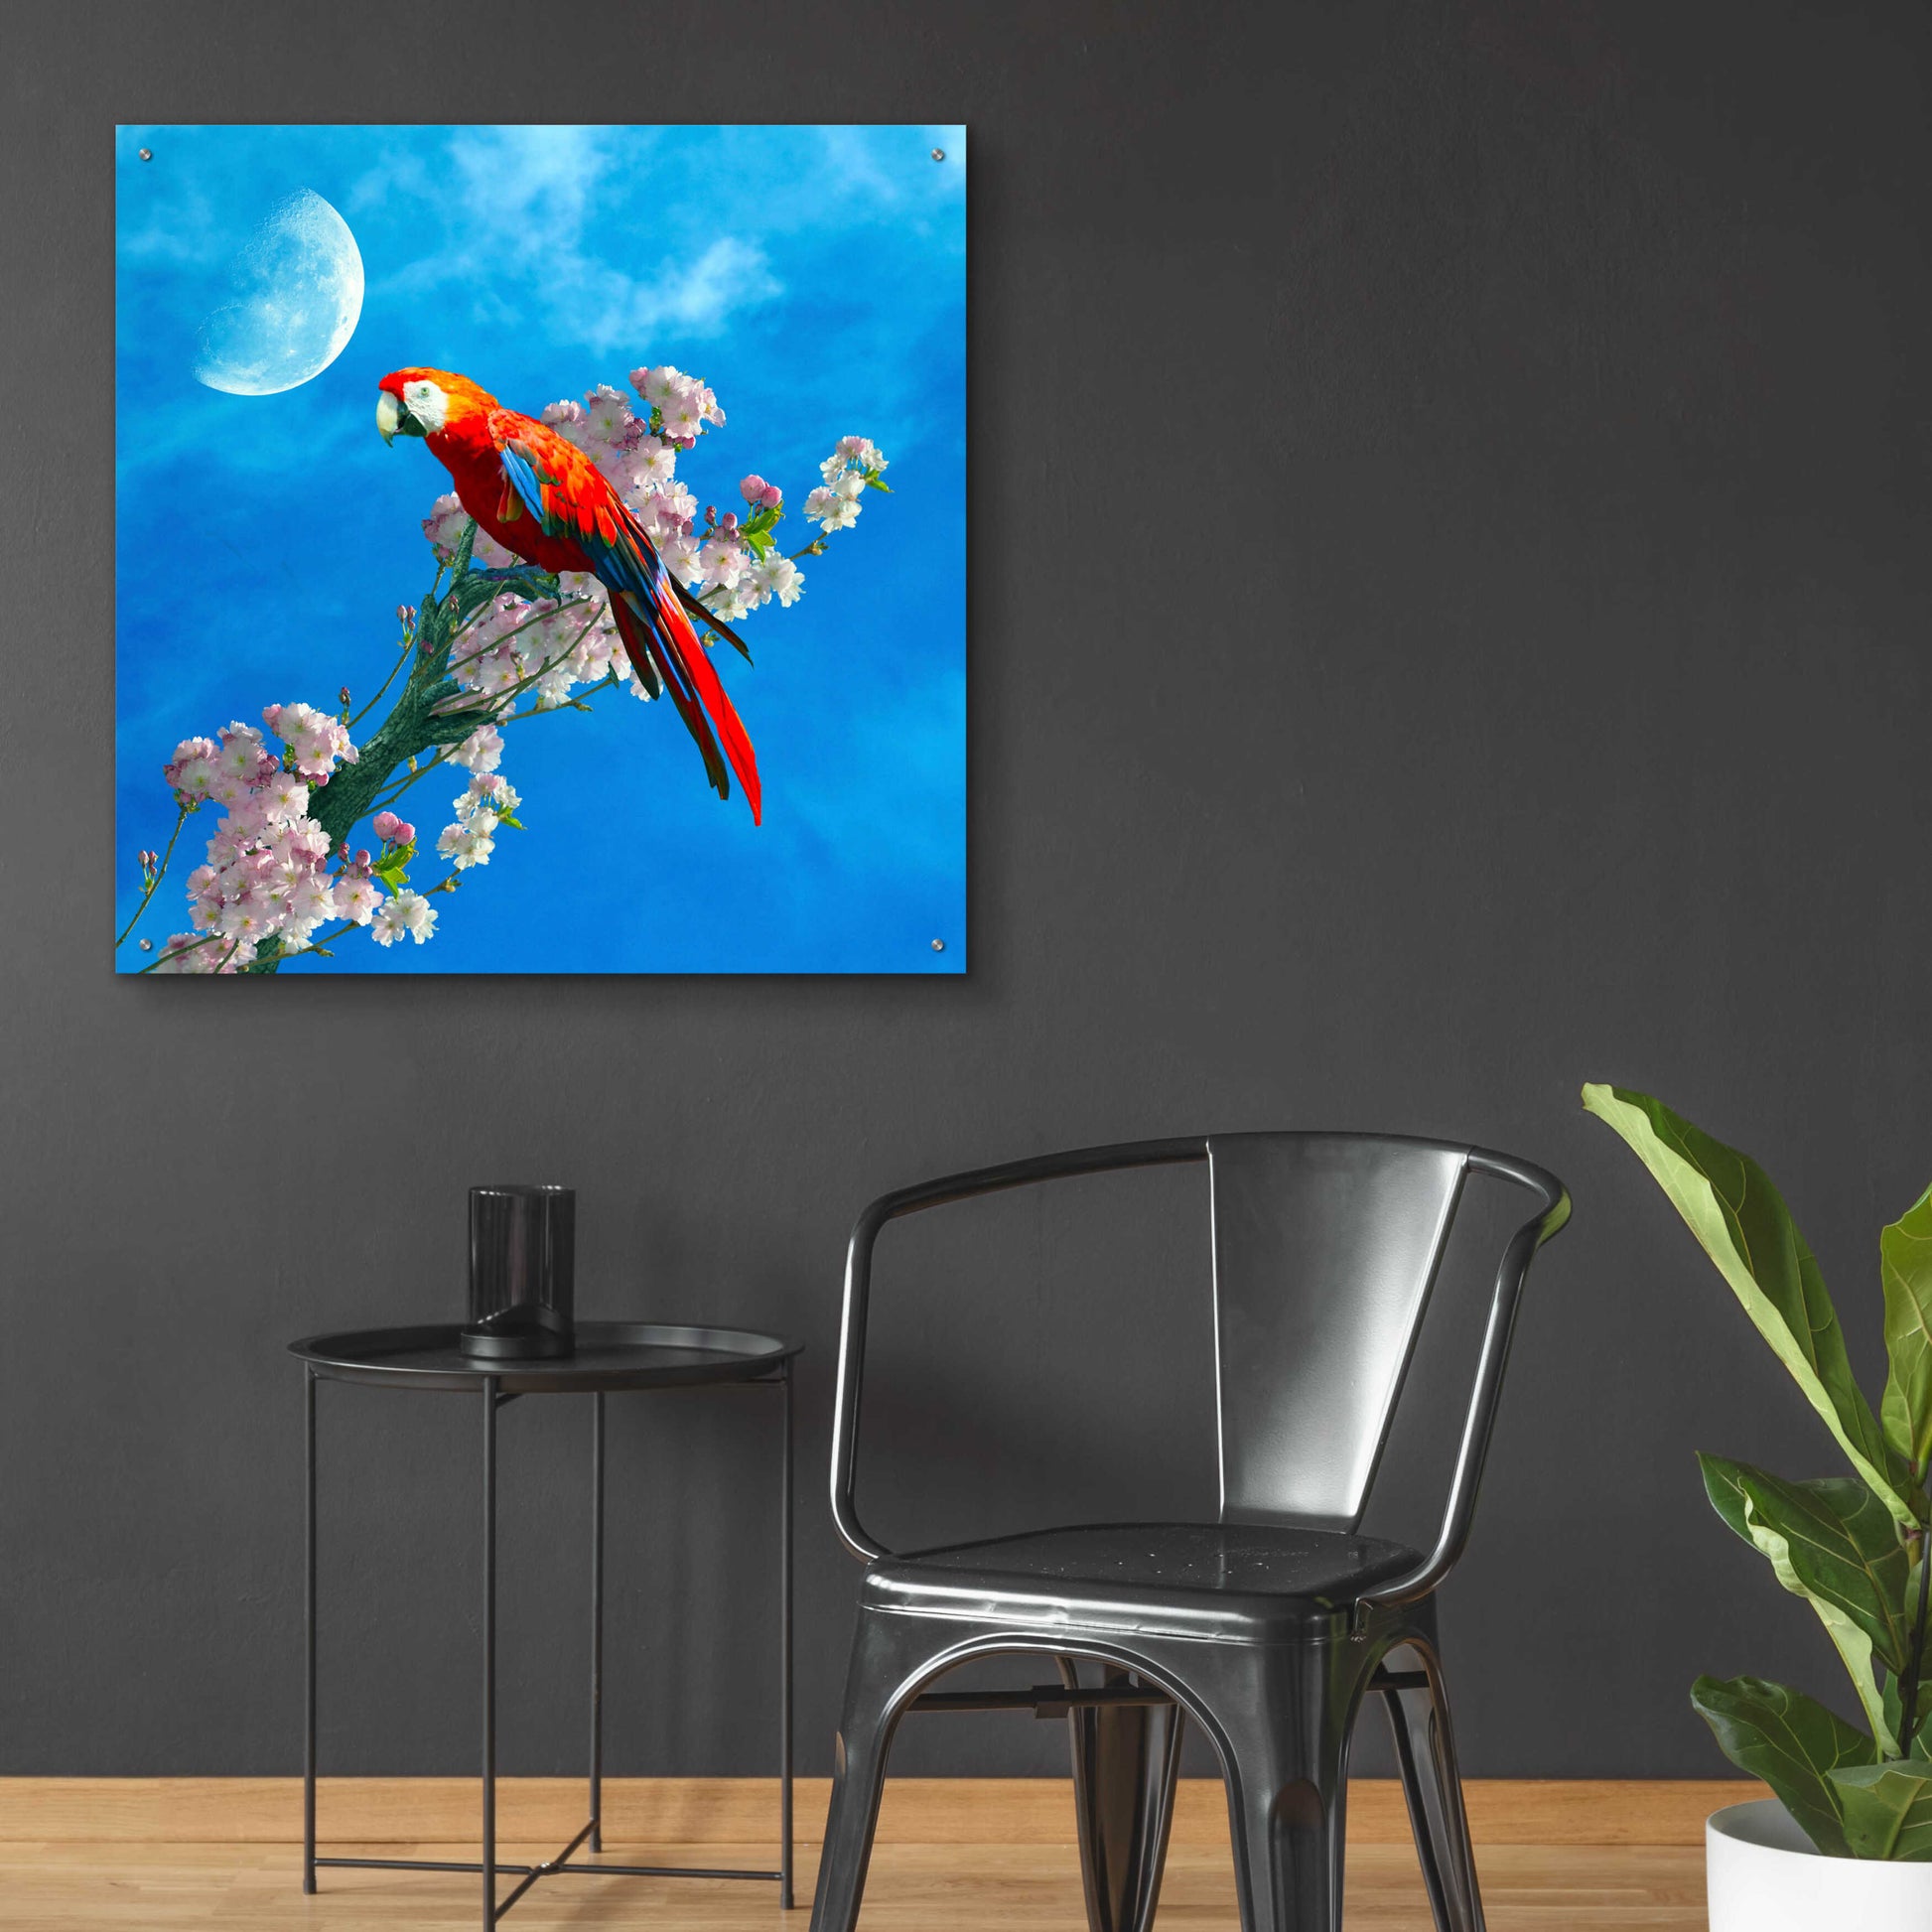 Epic Art 'Red Parrot' by Ata Alishahi, Acrylic Glass Wall Art,36x36